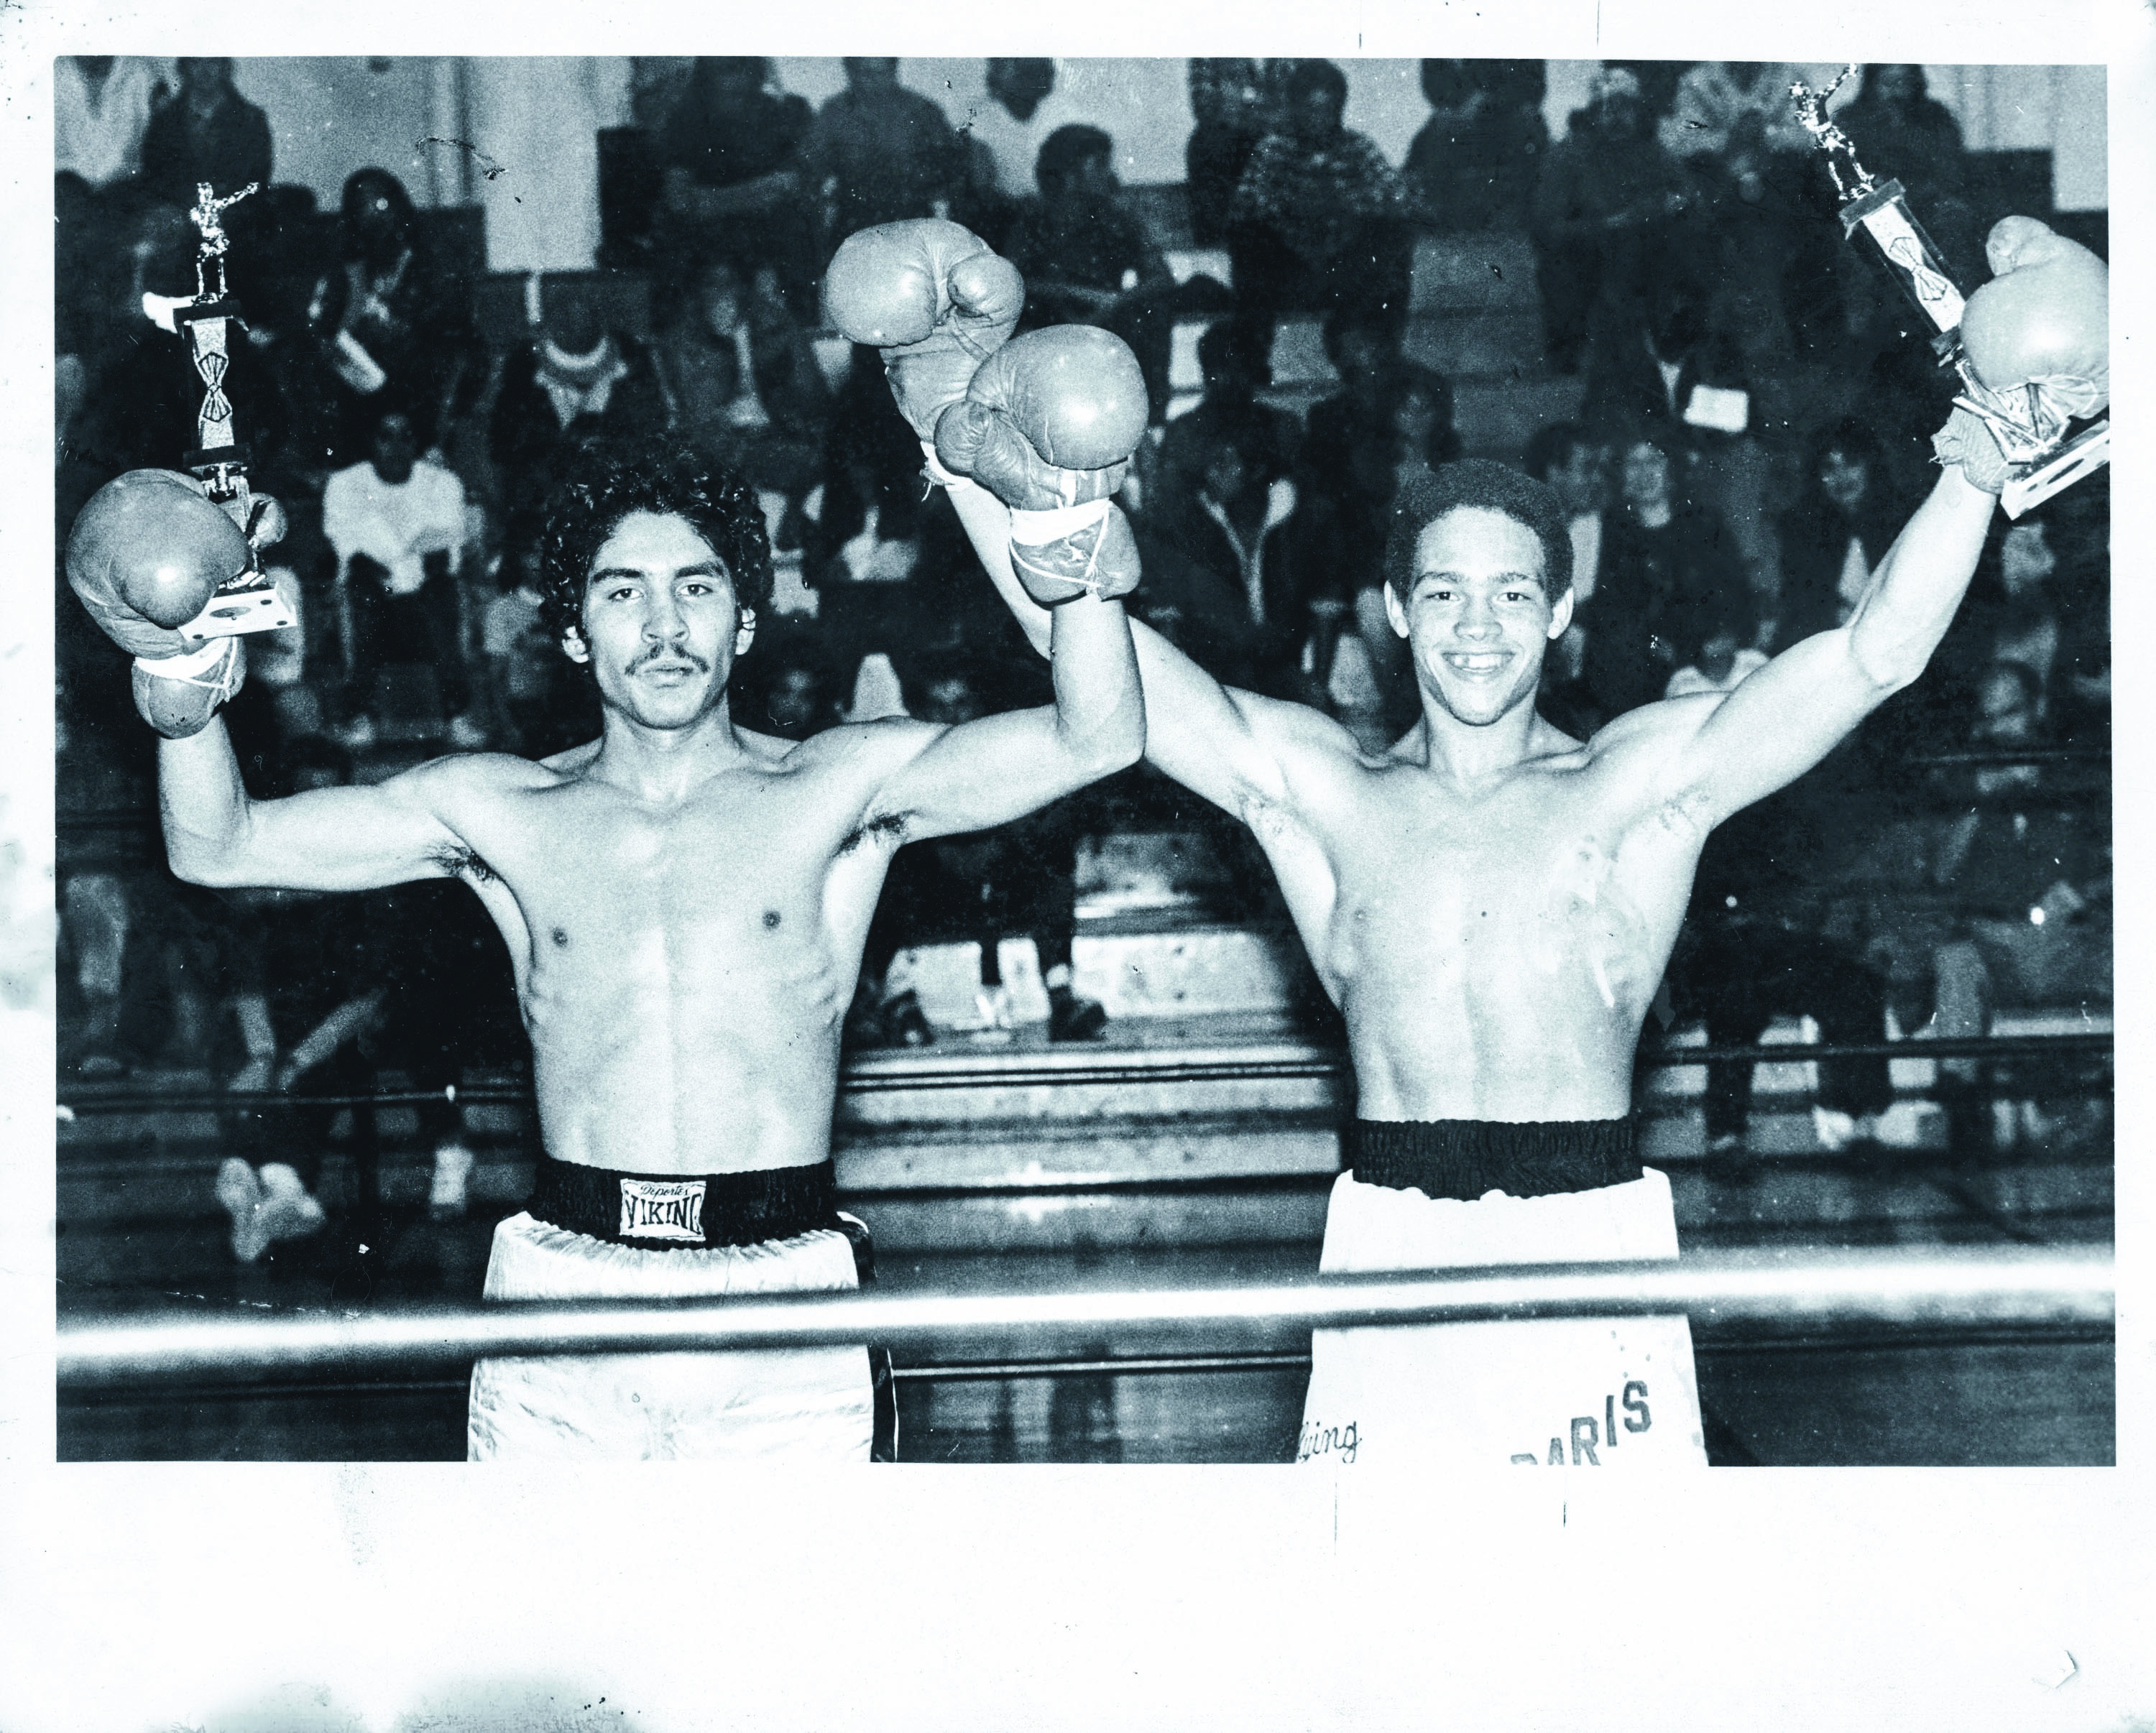 Paris Alexandar (right) celebrates a City College boxing exhibition victory in 1984. (Photo courtesy of Paris Alexander) 